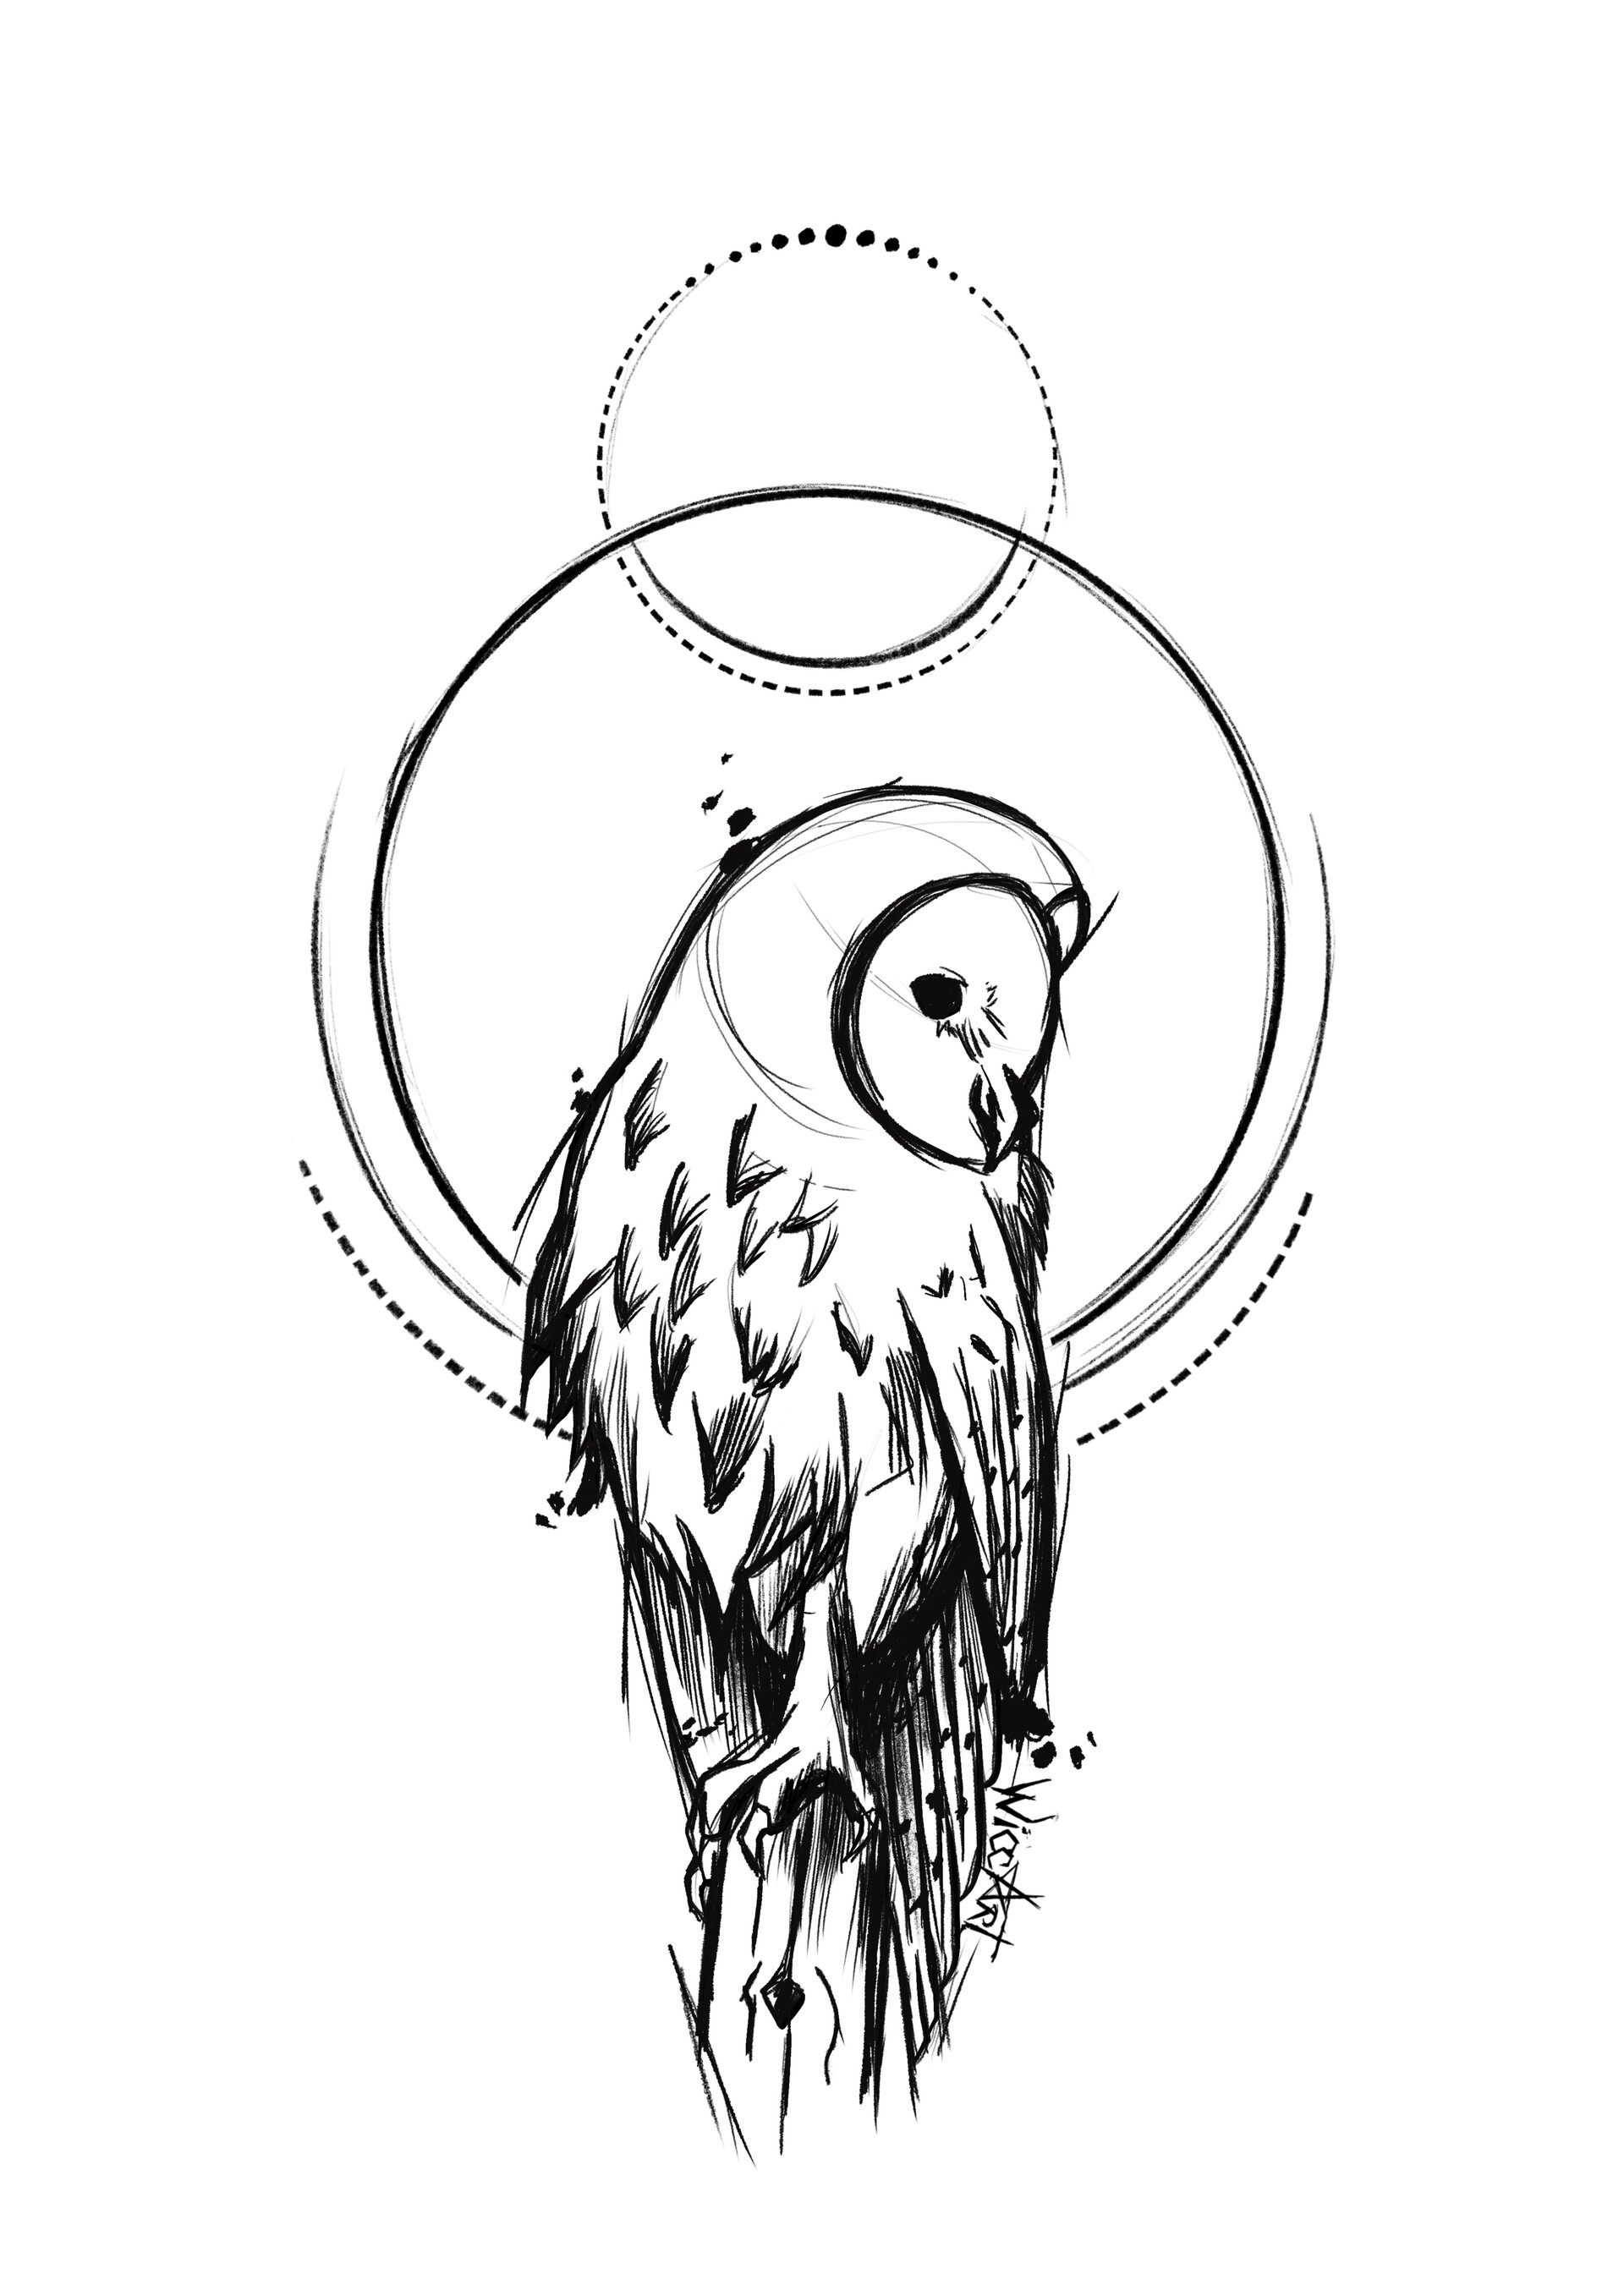 ArtStation - Geometric owl